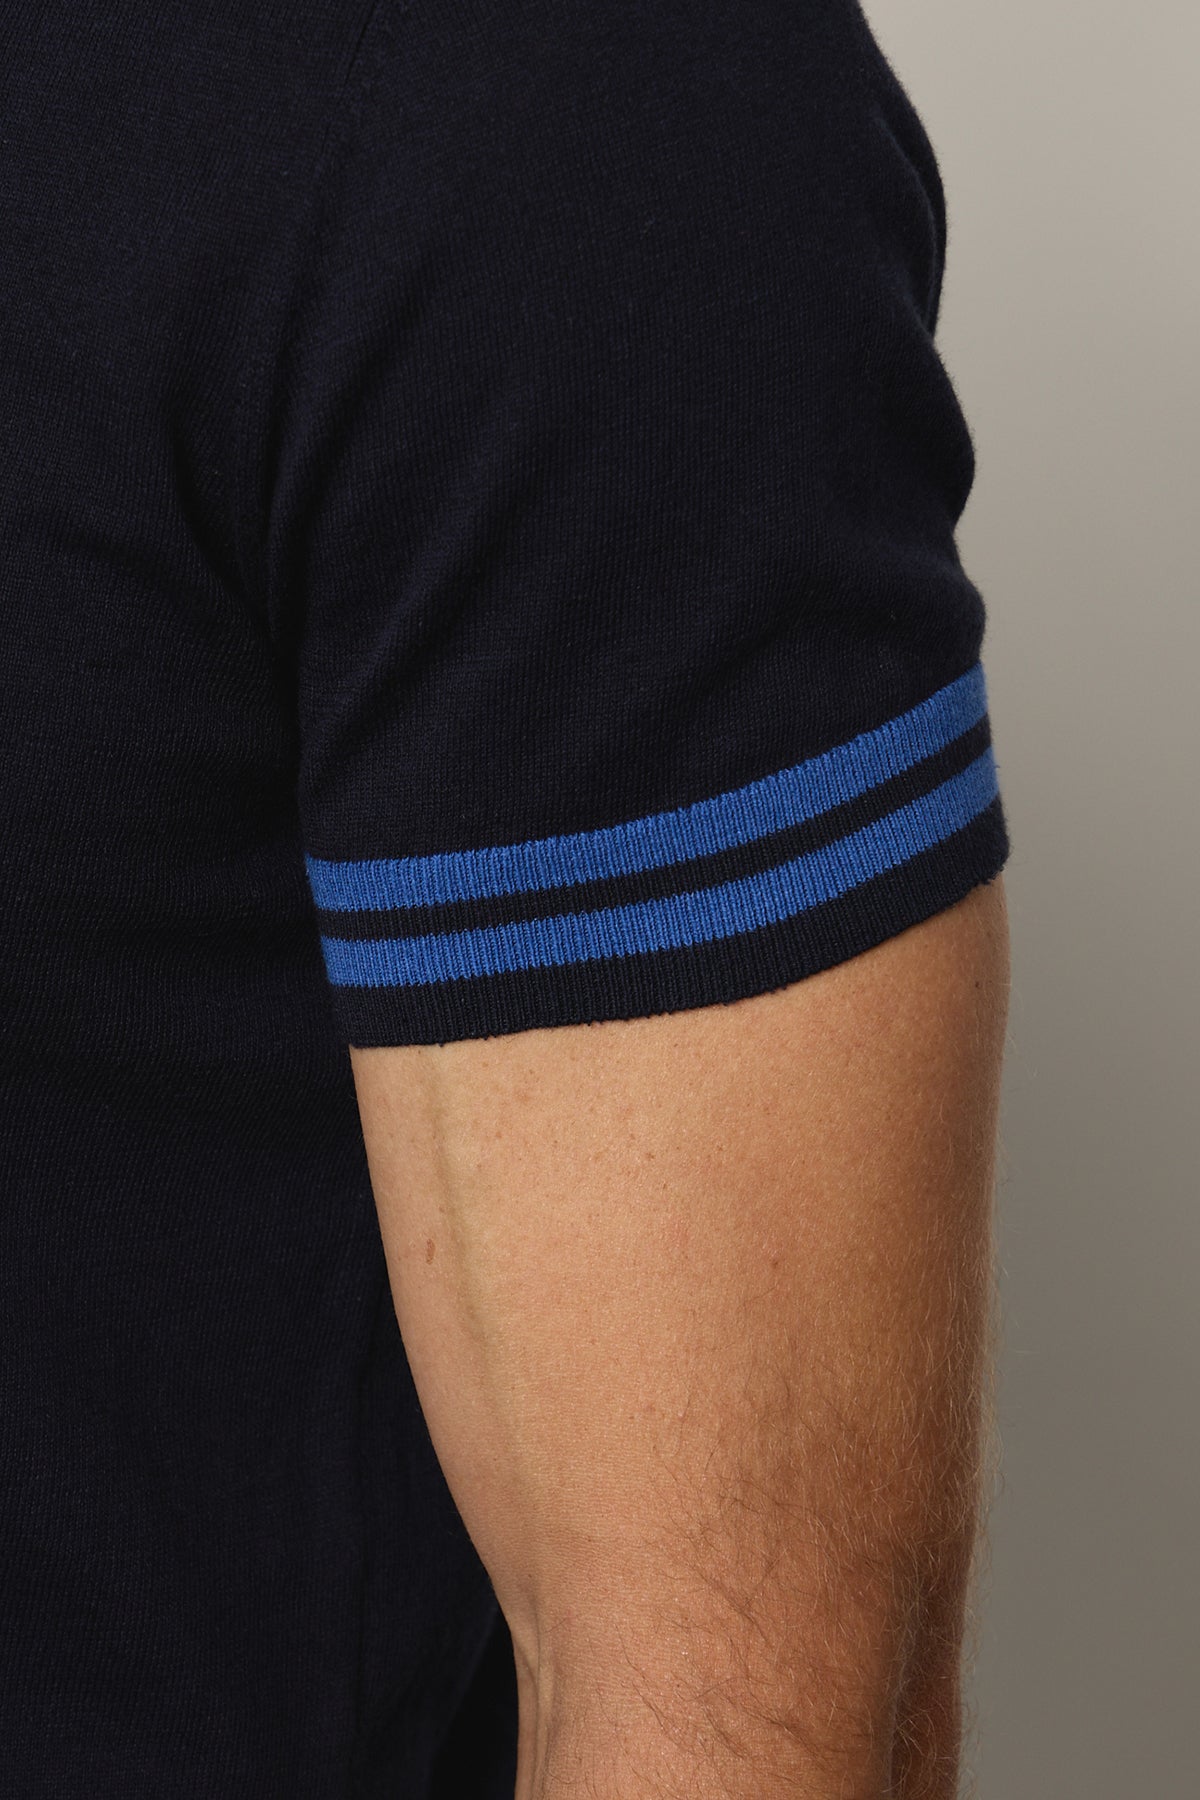   Hogan Polo in navy linen blend detail of double stripe on sleeve trim 